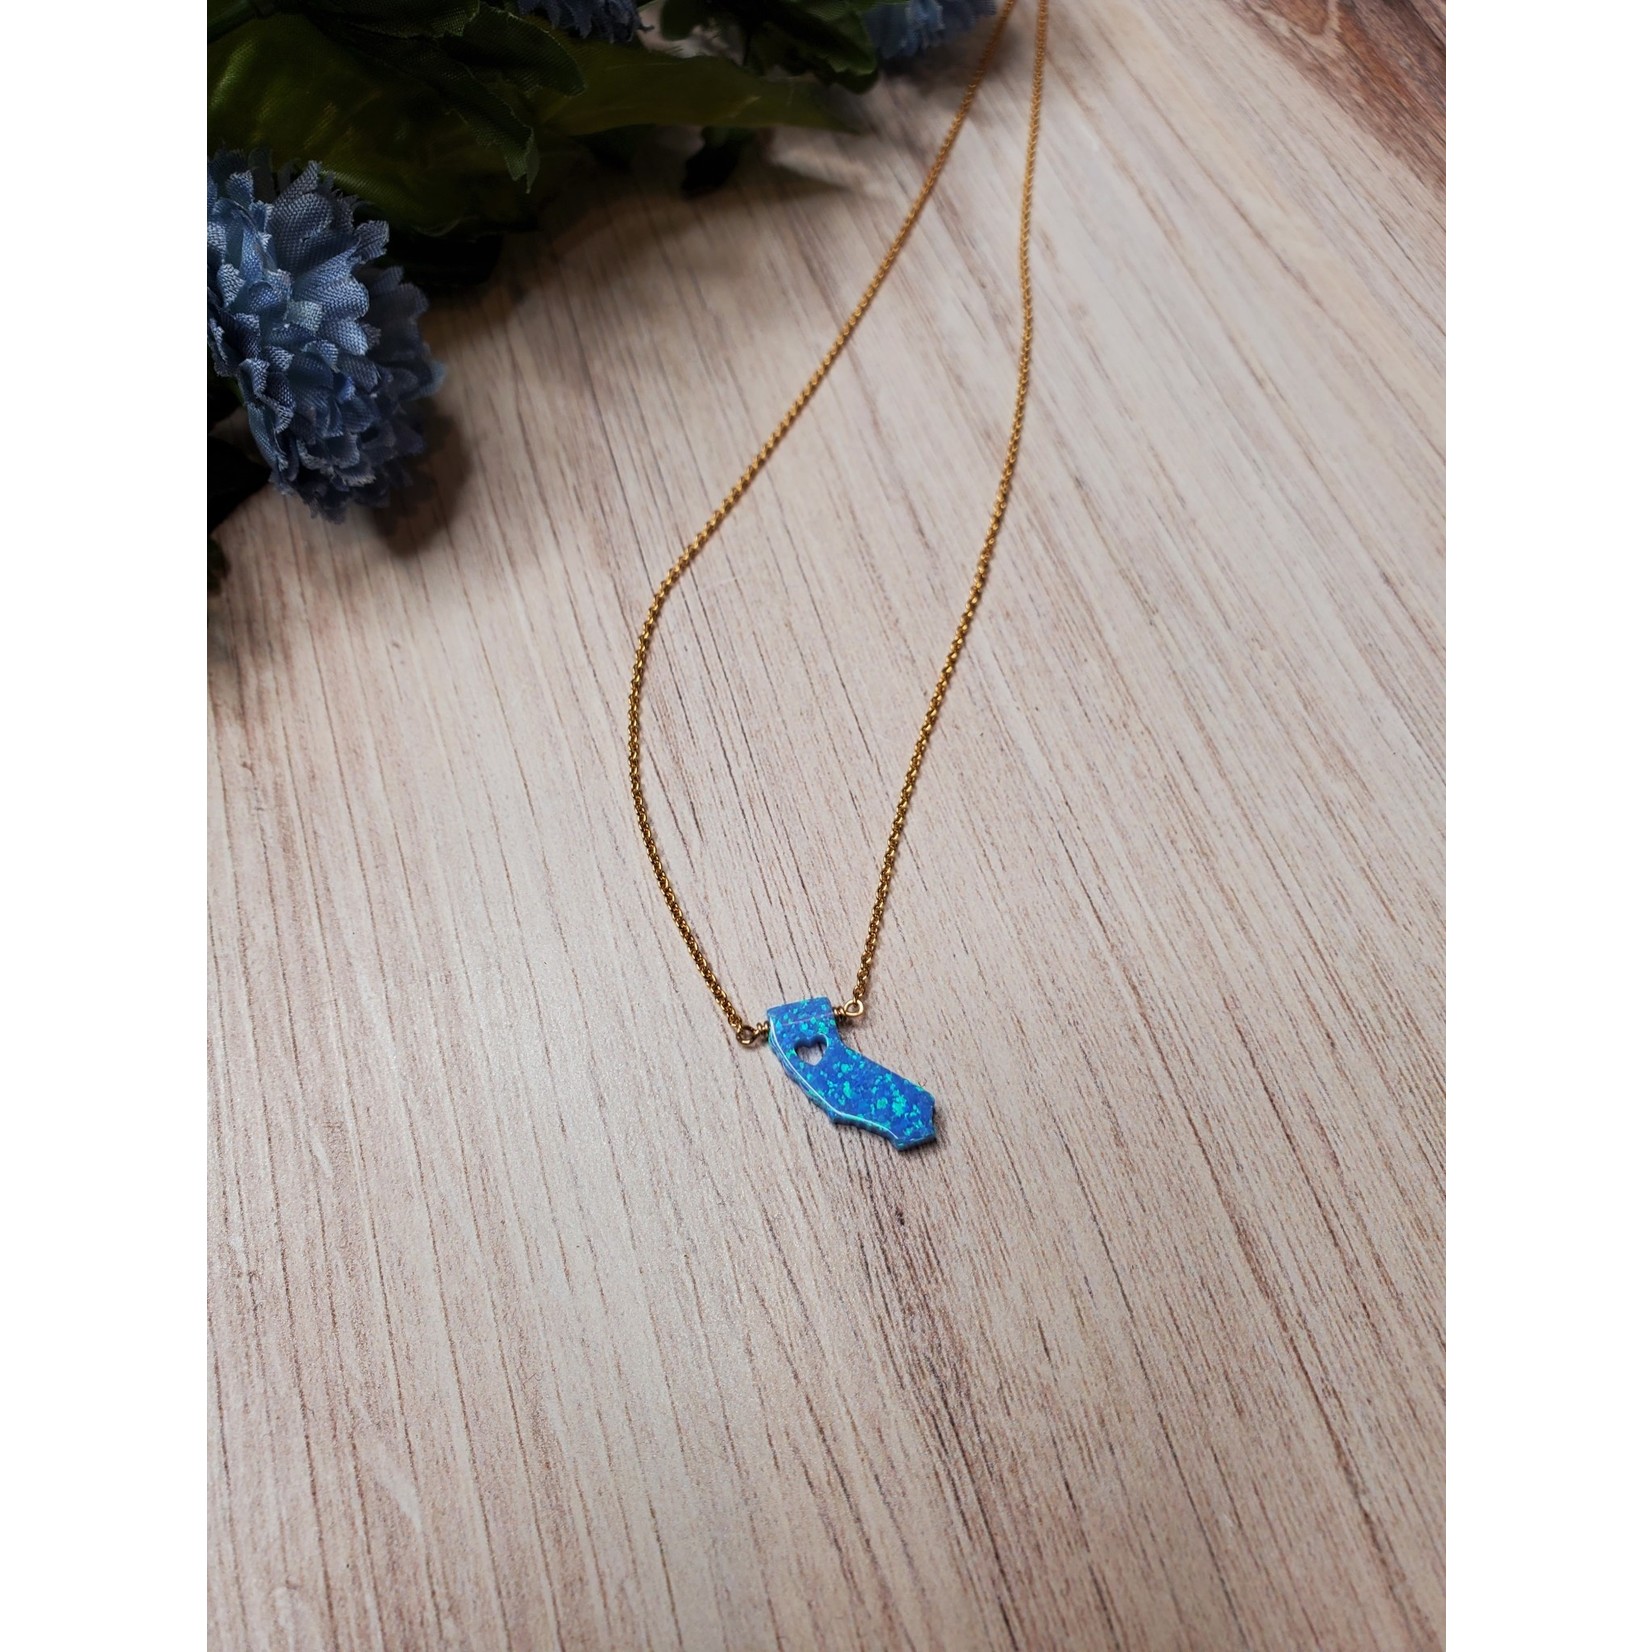 Lala Jewelry Cali Love - Light Blue Opal